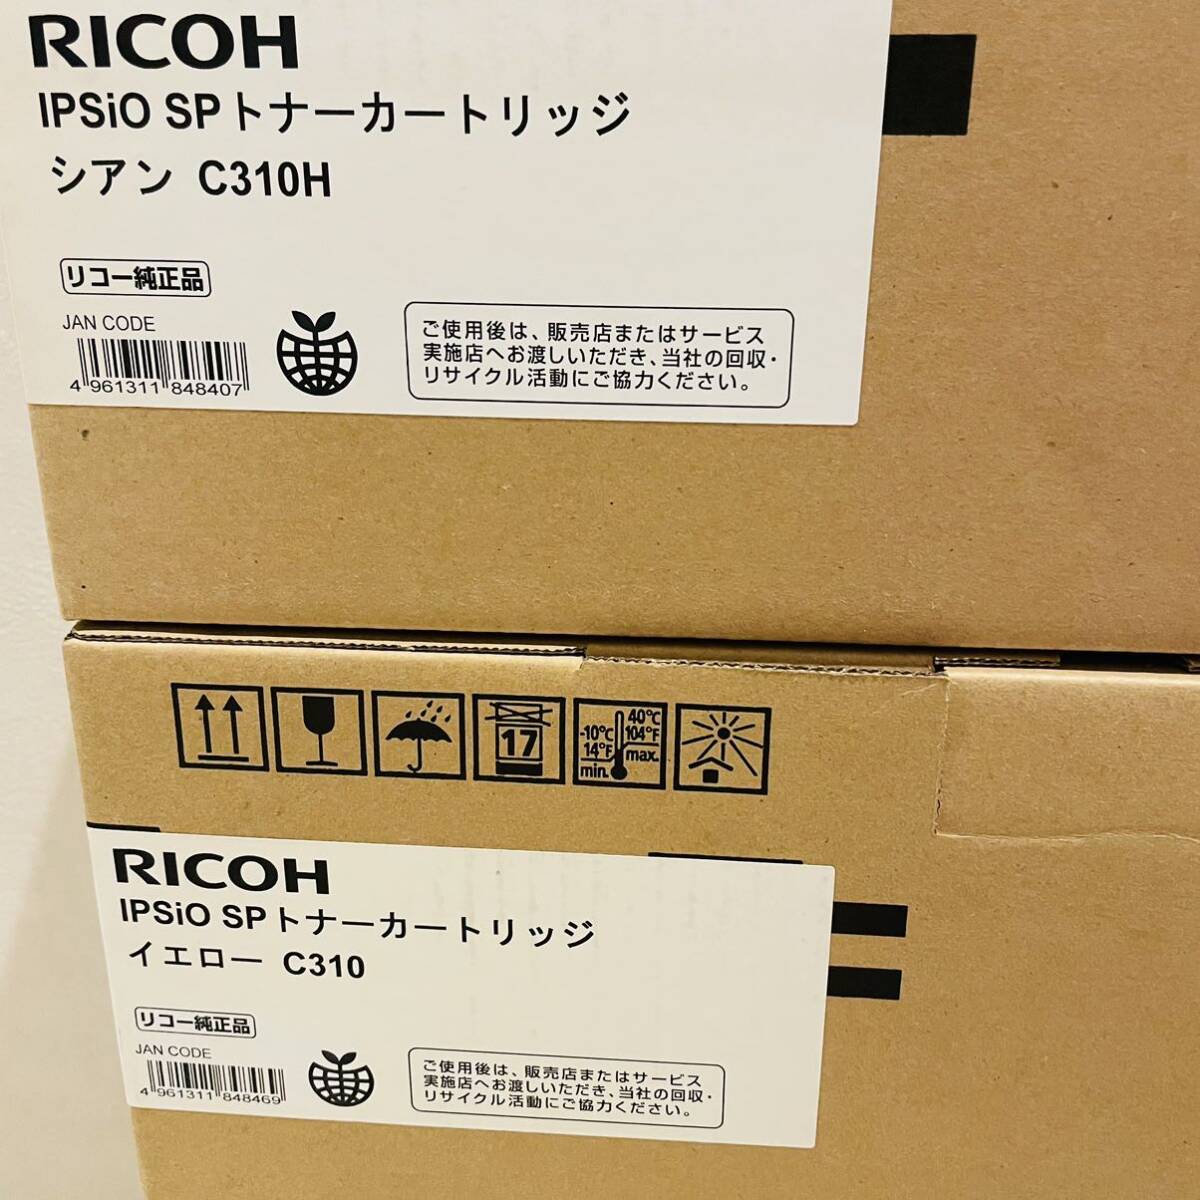 RICOH Ricoh toner cartridge C310H C310 Cyan yellow black magenta unused genuine products 